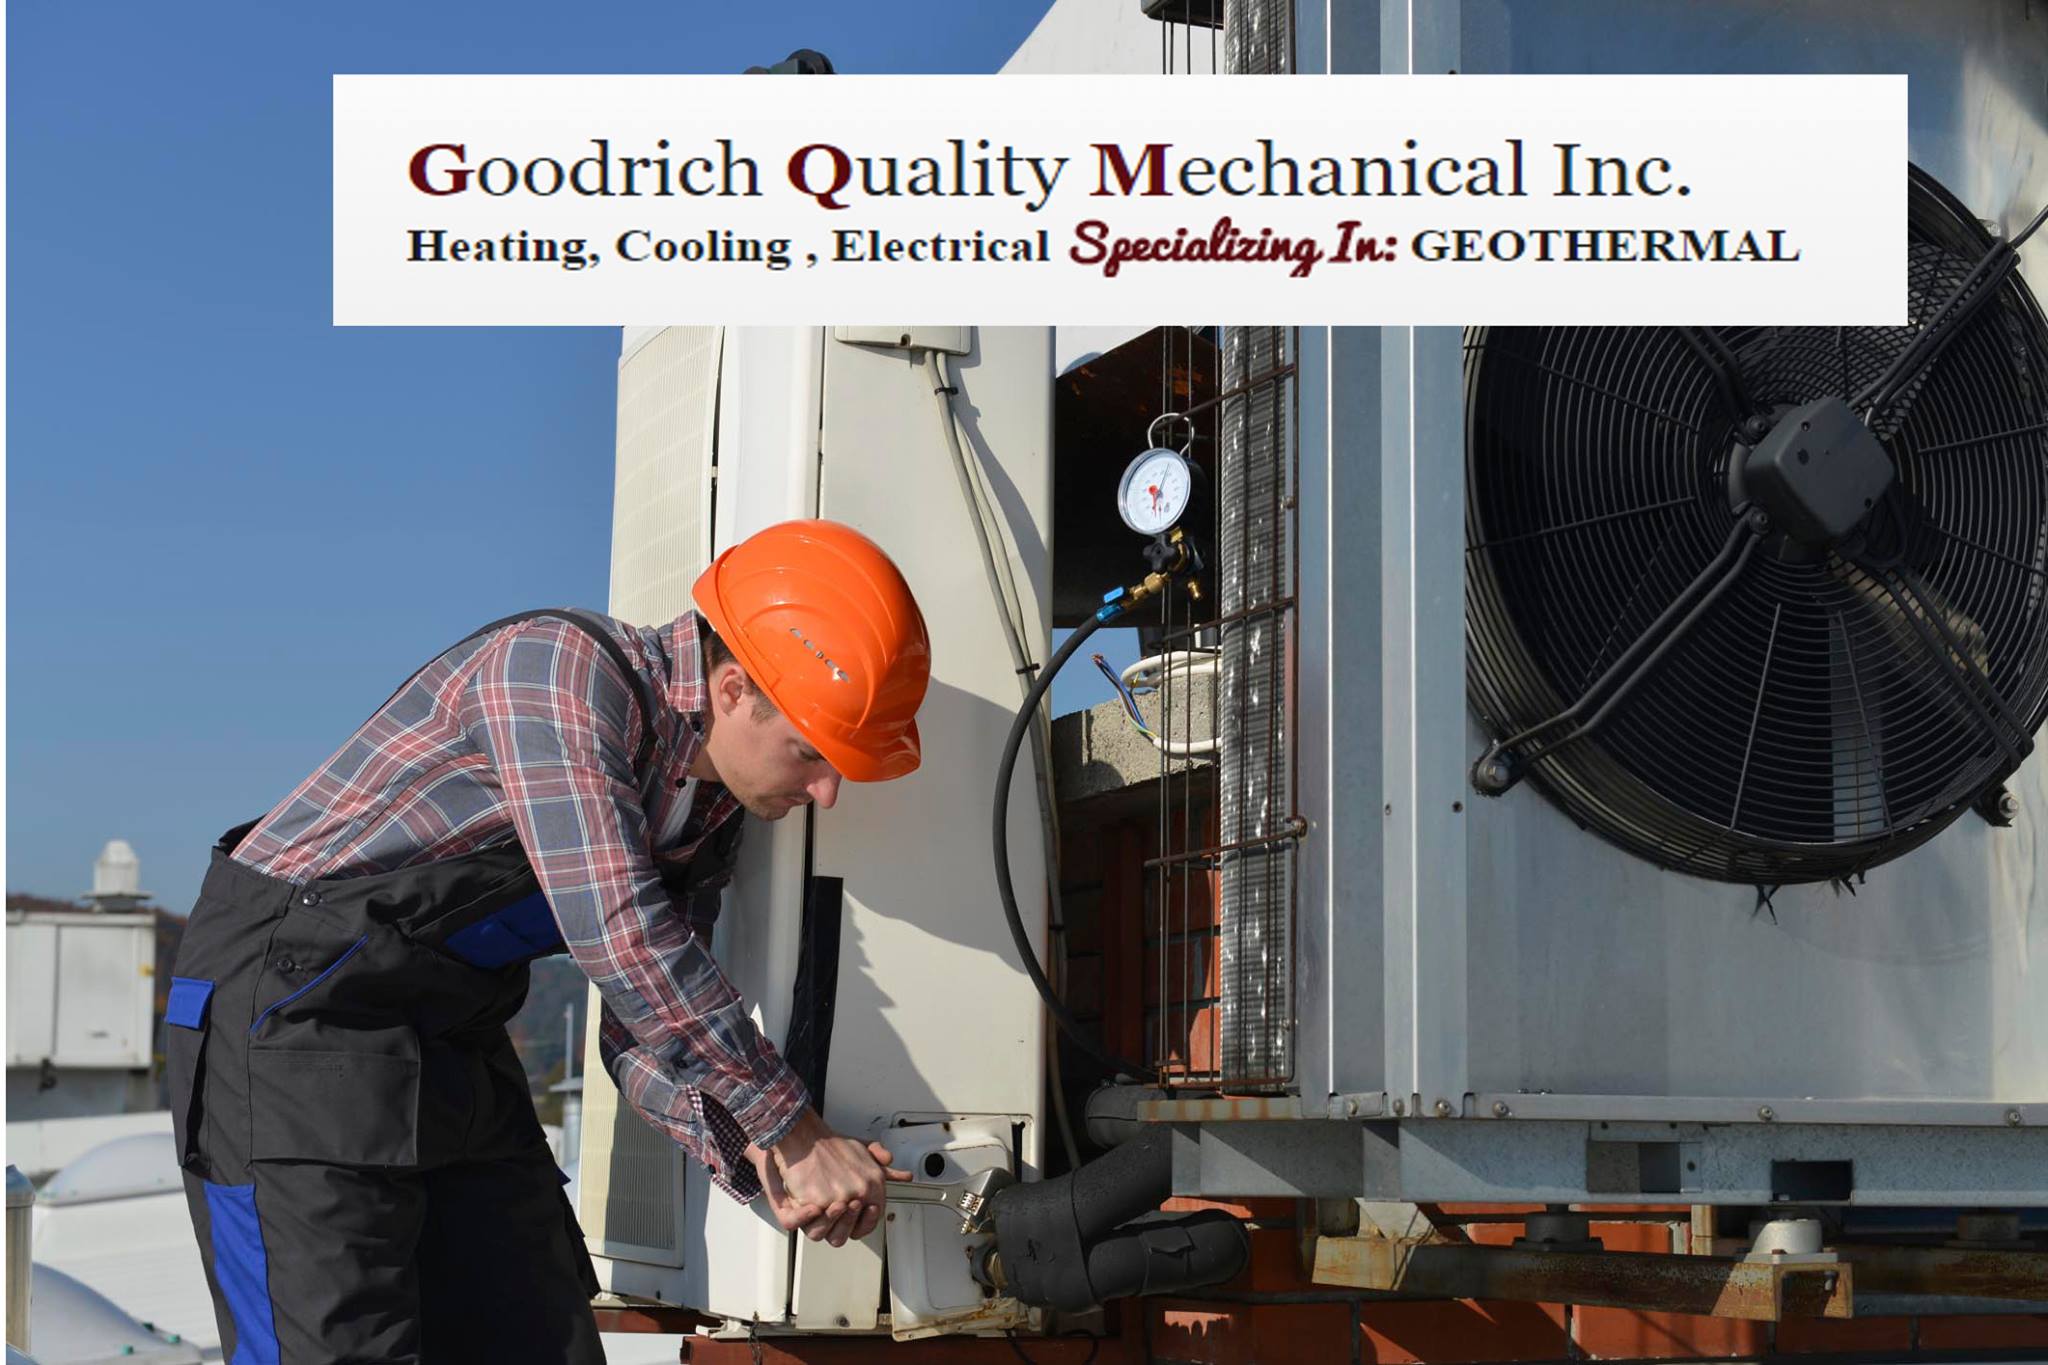 Goodrich Quality Mechanical, Inc. 1784 US-35, Logansport Indiana 46947